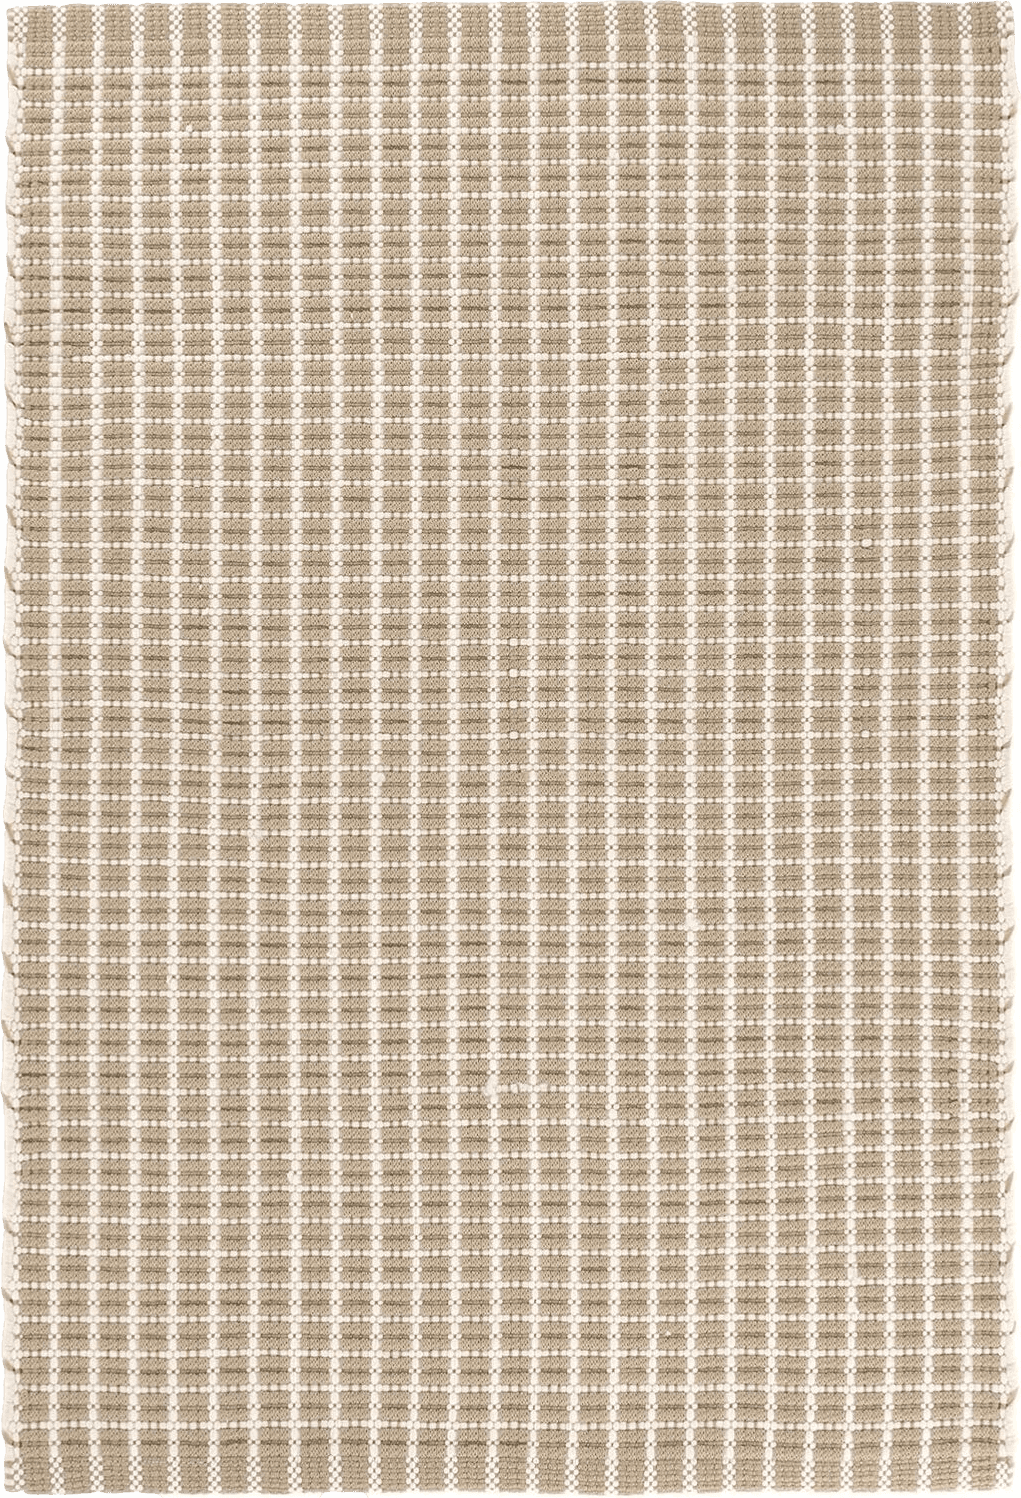 Dash and Albert Gridiron Wheat Handwoven Indoor/Outdoor Rug, 8 X 10 Feet, Neutral Geometric Pattern